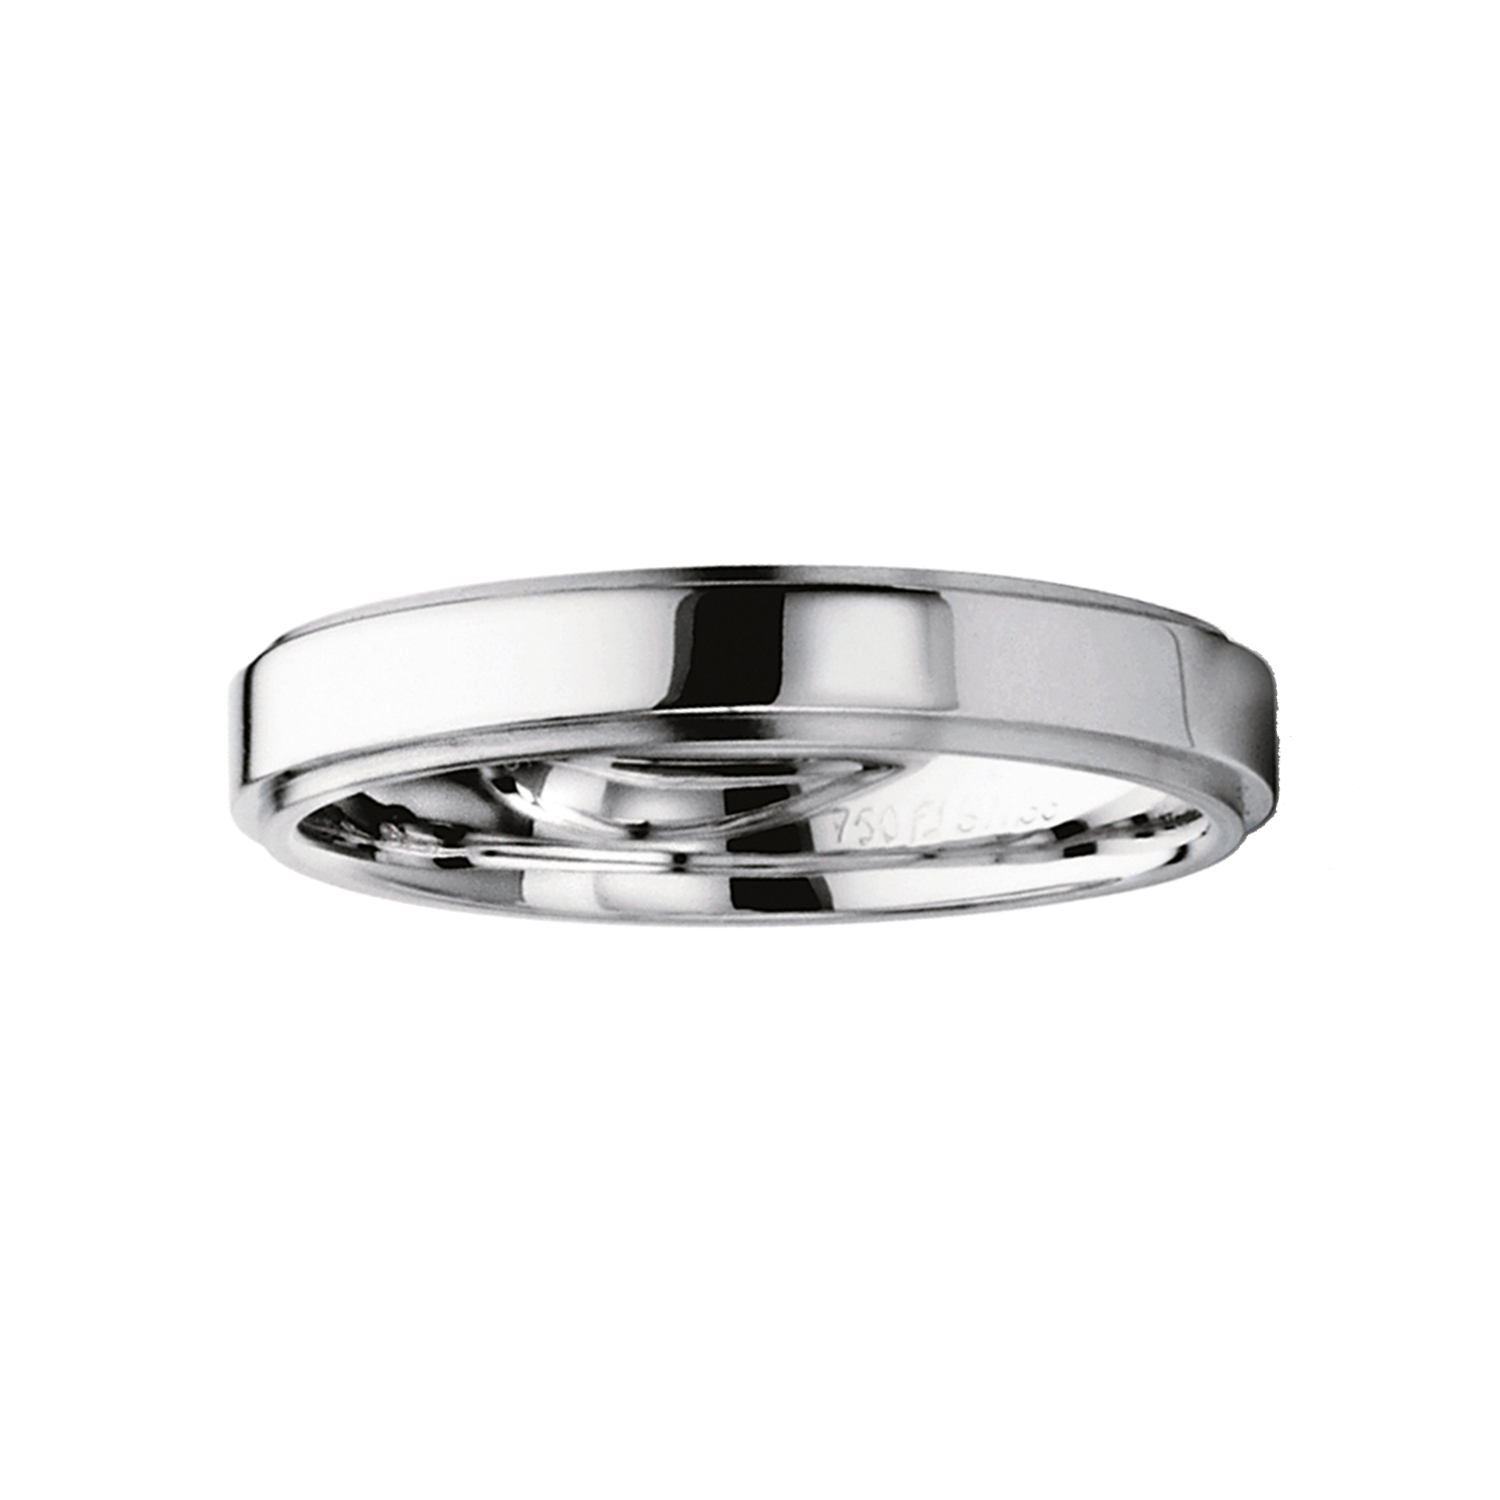  FURRER JACOT, Wedding rings, SKU: 71-28110-0-0/040-74-0-63-0 | watchapproach.com